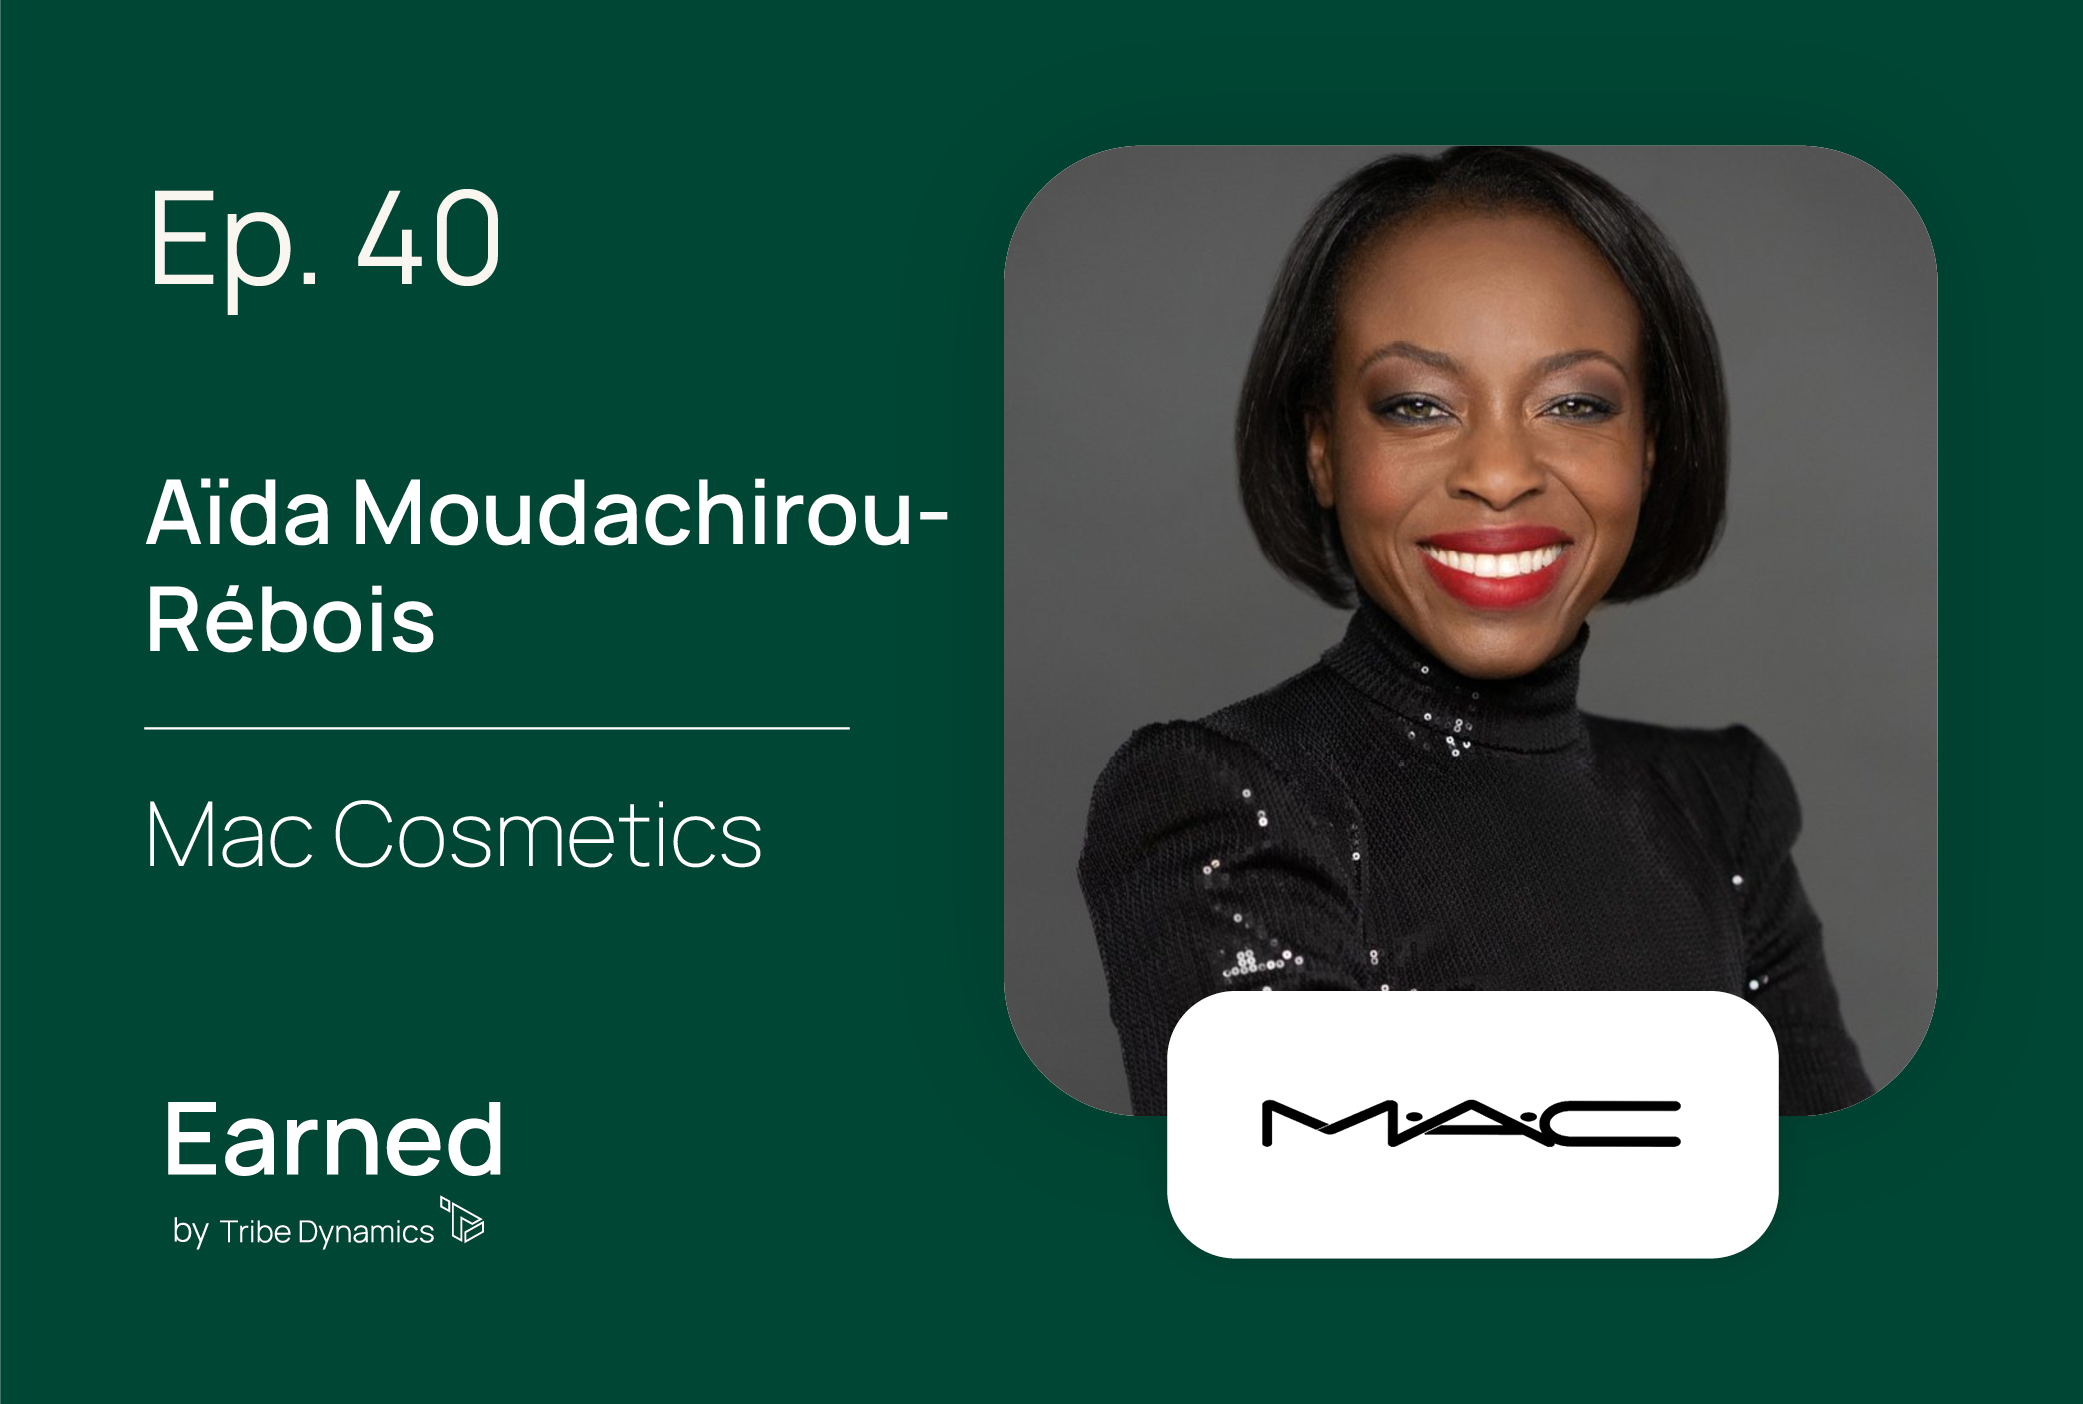 aida moudachirou-rebois MAC Cosmetics